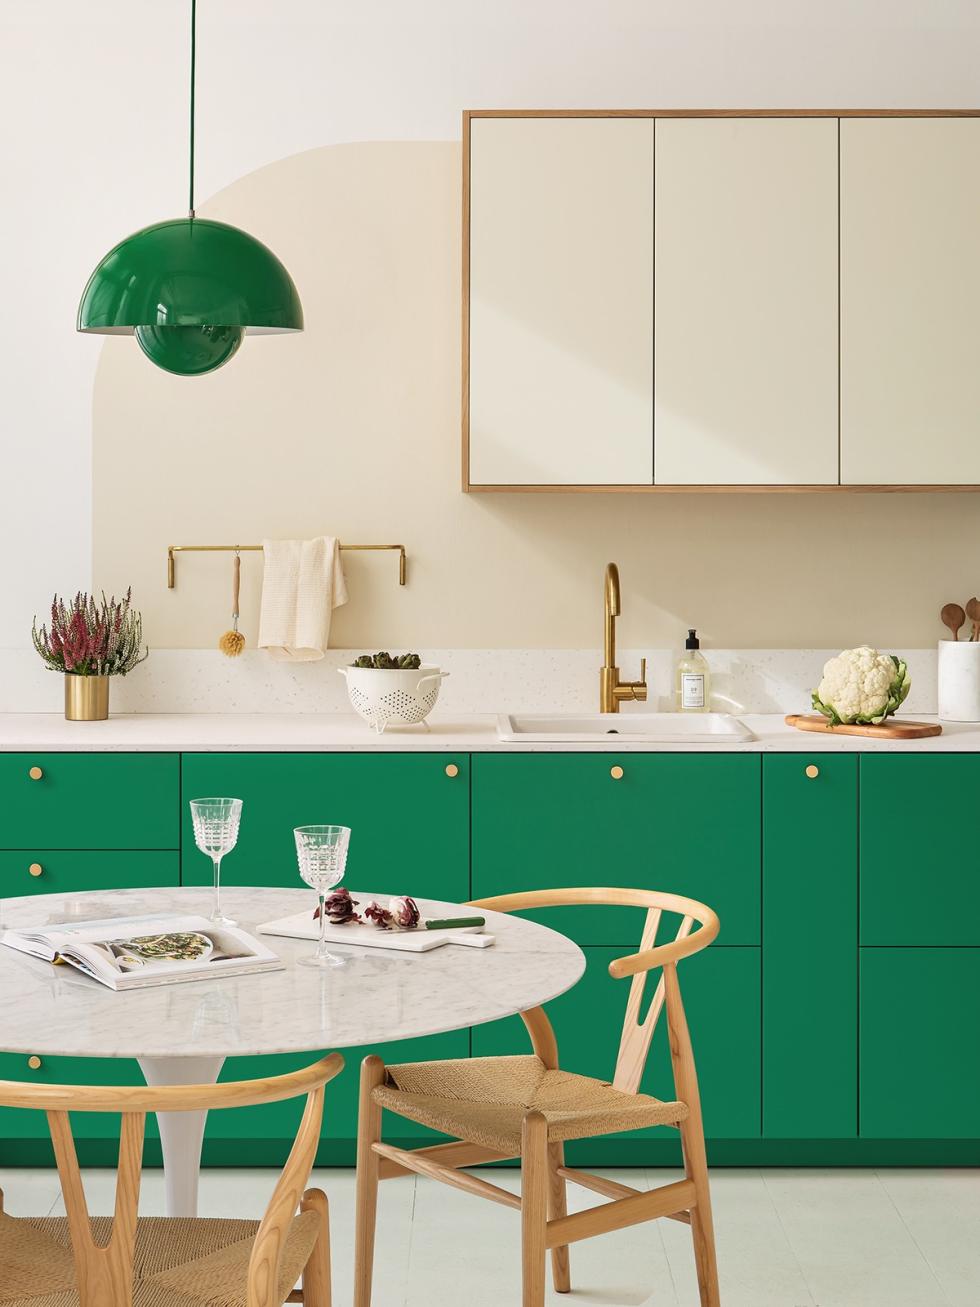 Leaf kitchen designed by Plum studio - ⓒ Hervé Goluza for Plum